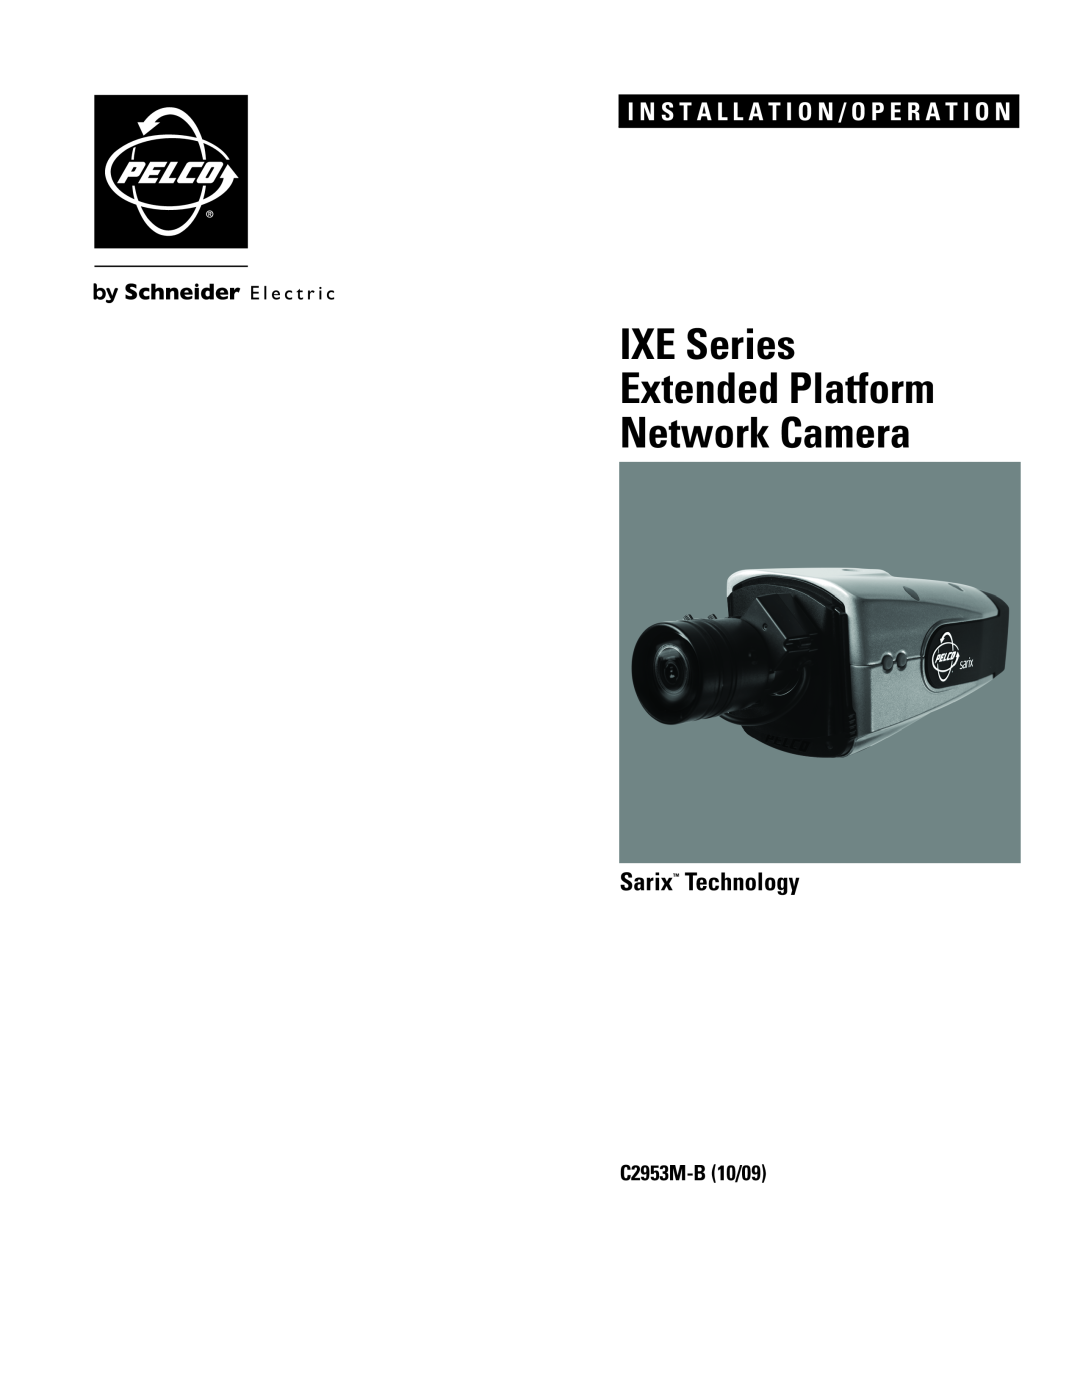 Pelco manual Sarix Technology, C2953M-B 10/09, IXE Series Extended Platform Network Camera 